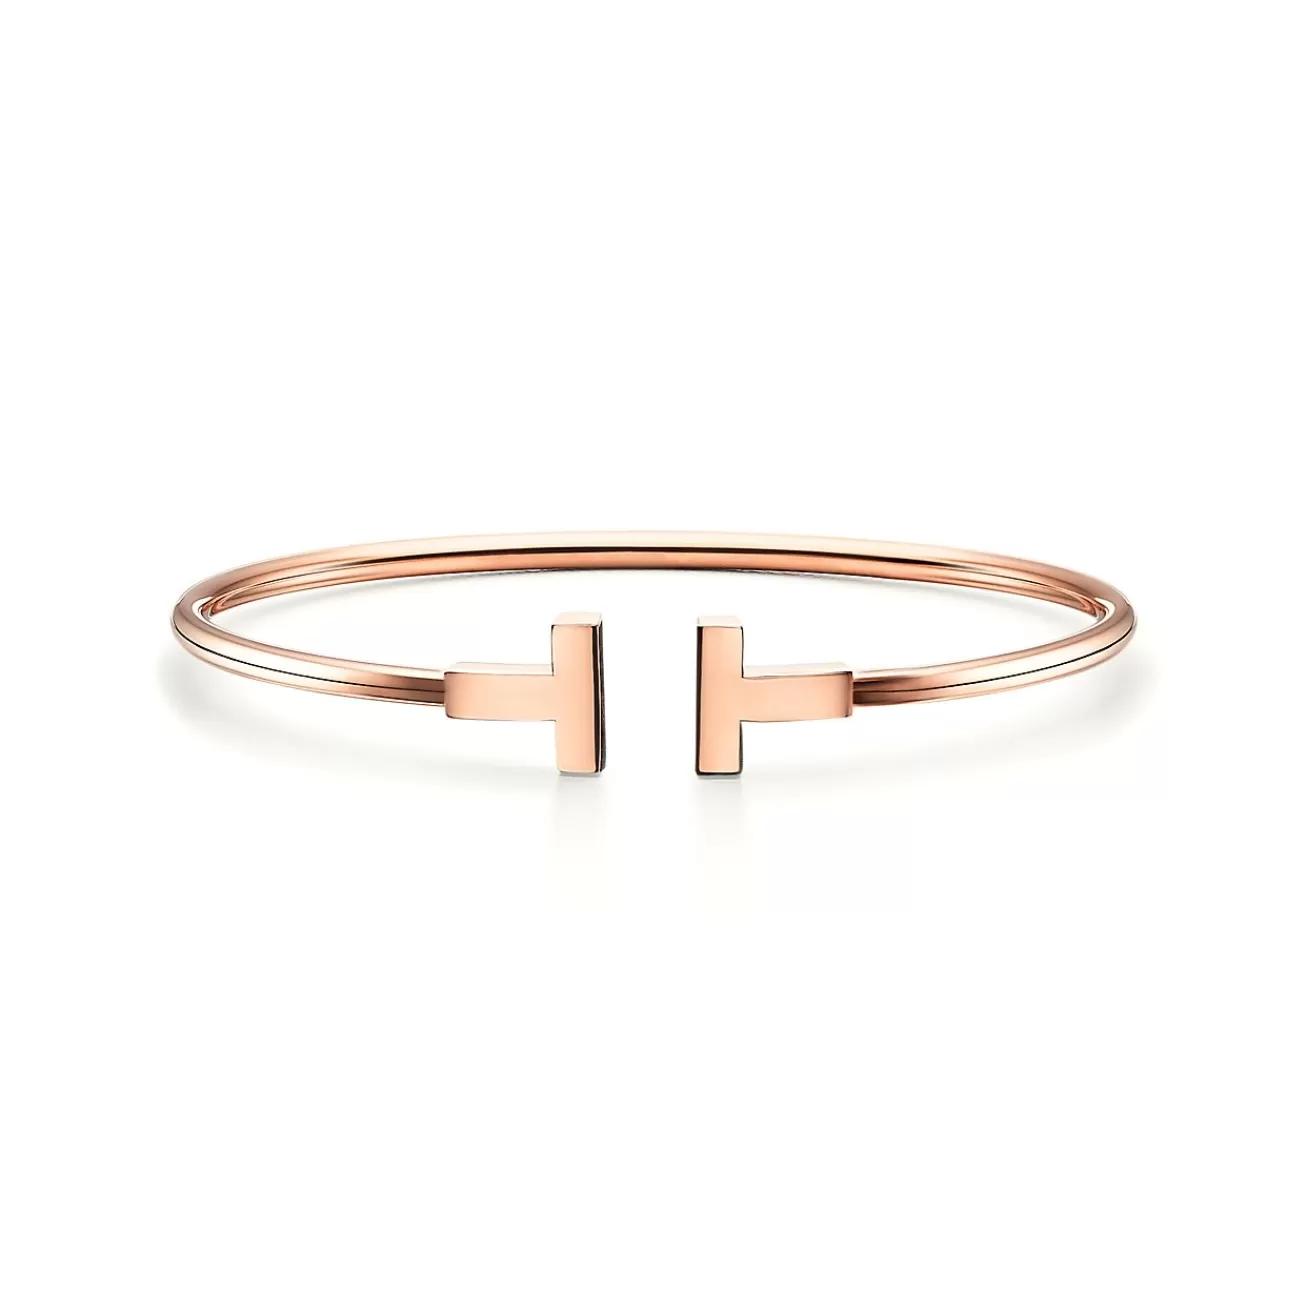 Tiffany & Co. Tiffany T wire bracelet in 18k rose gold, medium. | ^ Bracelets | Dainty Jewelry